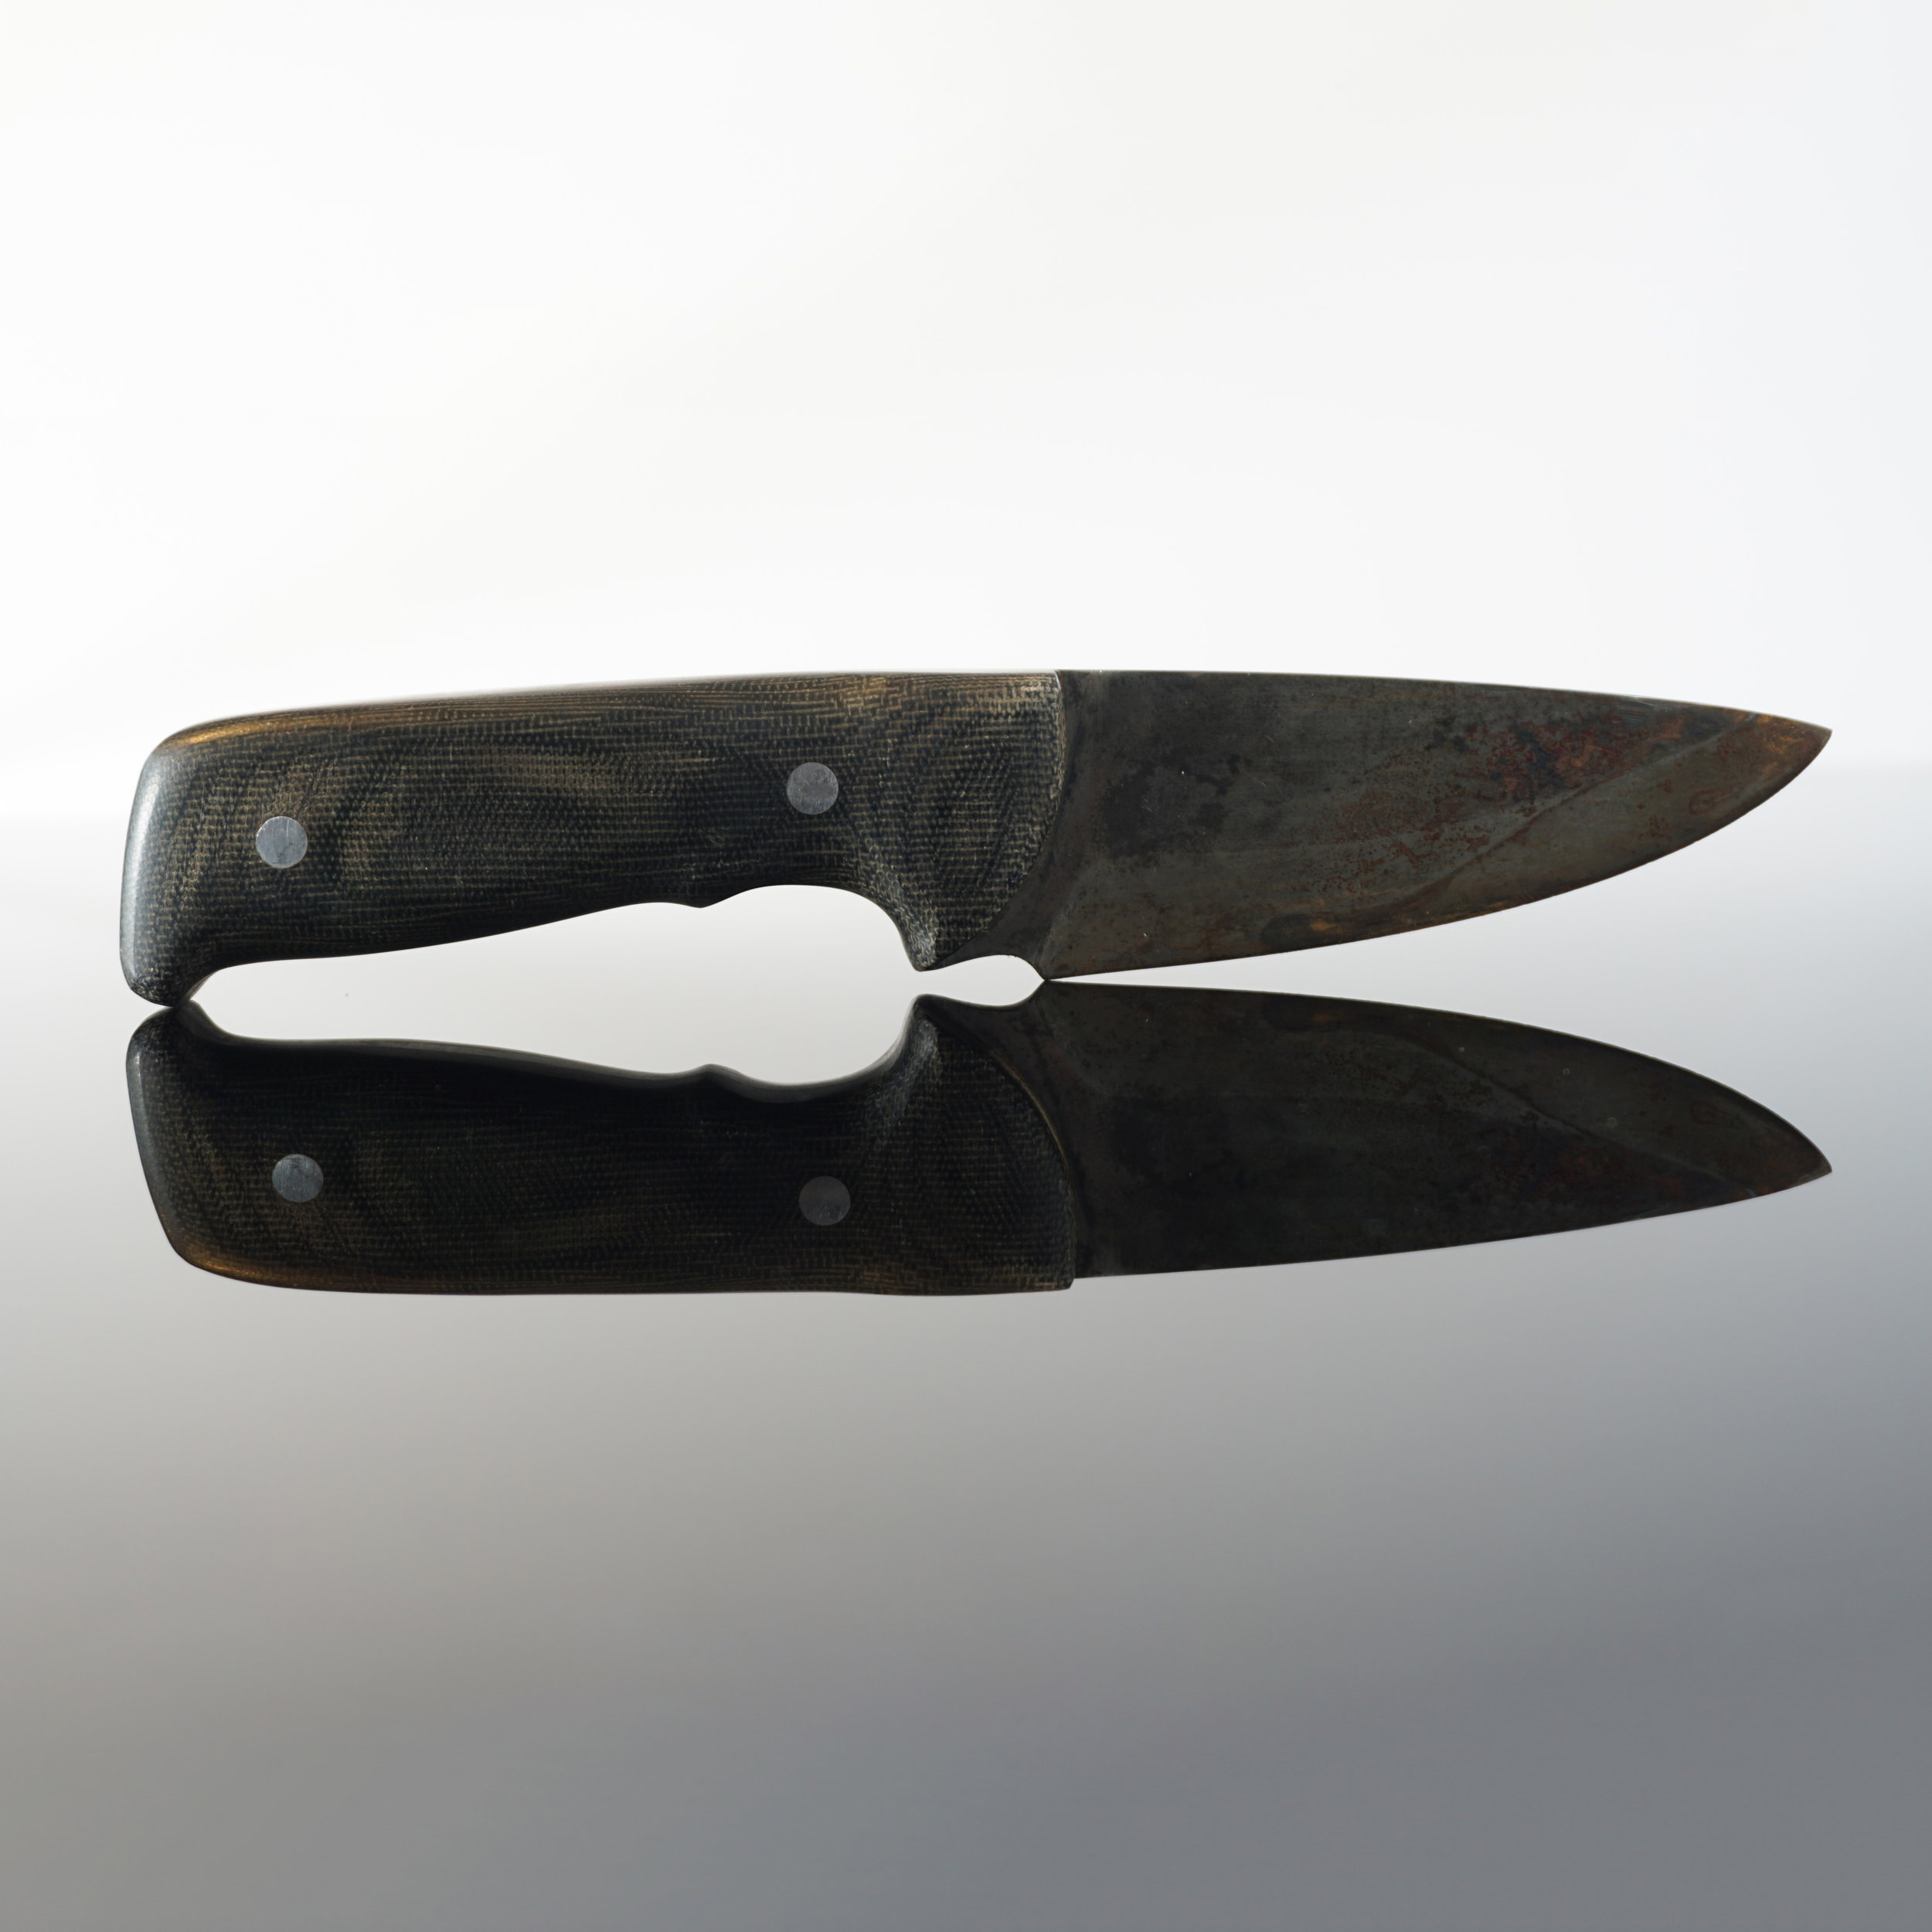 squared knife.jpg